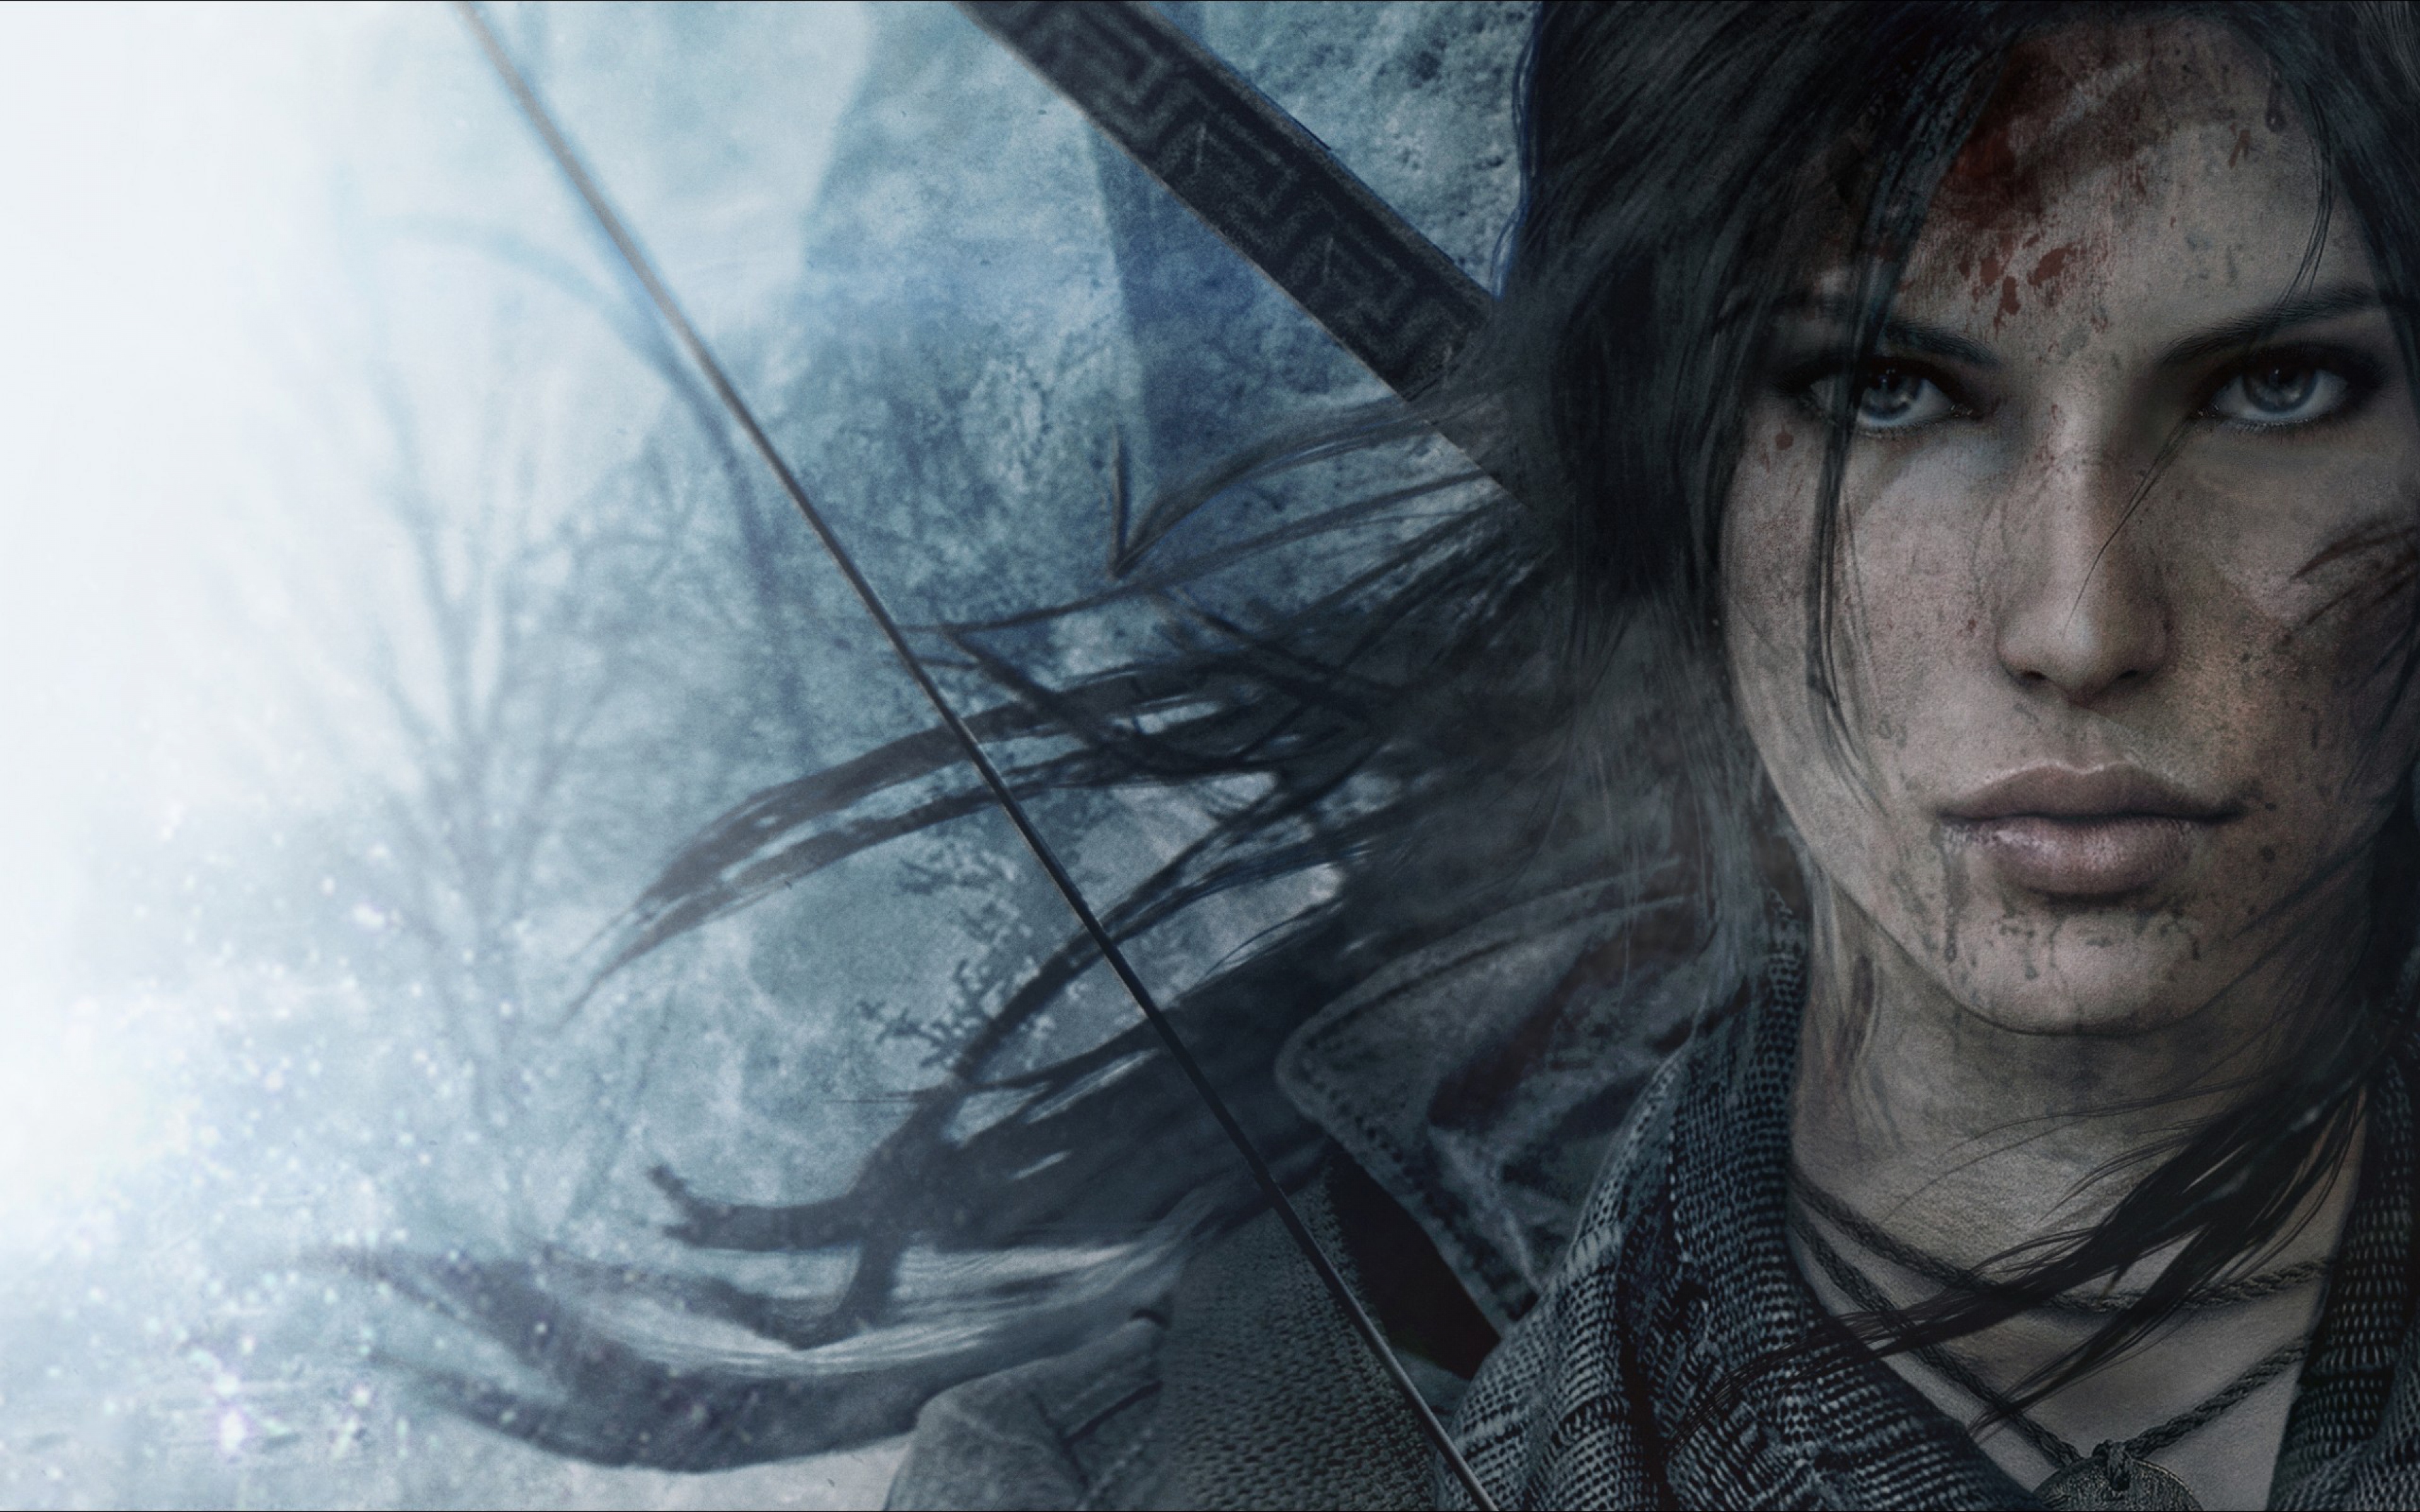 Lara Croft Tomb Raider Hd Games 4k Wallpapers Images Backgrounds